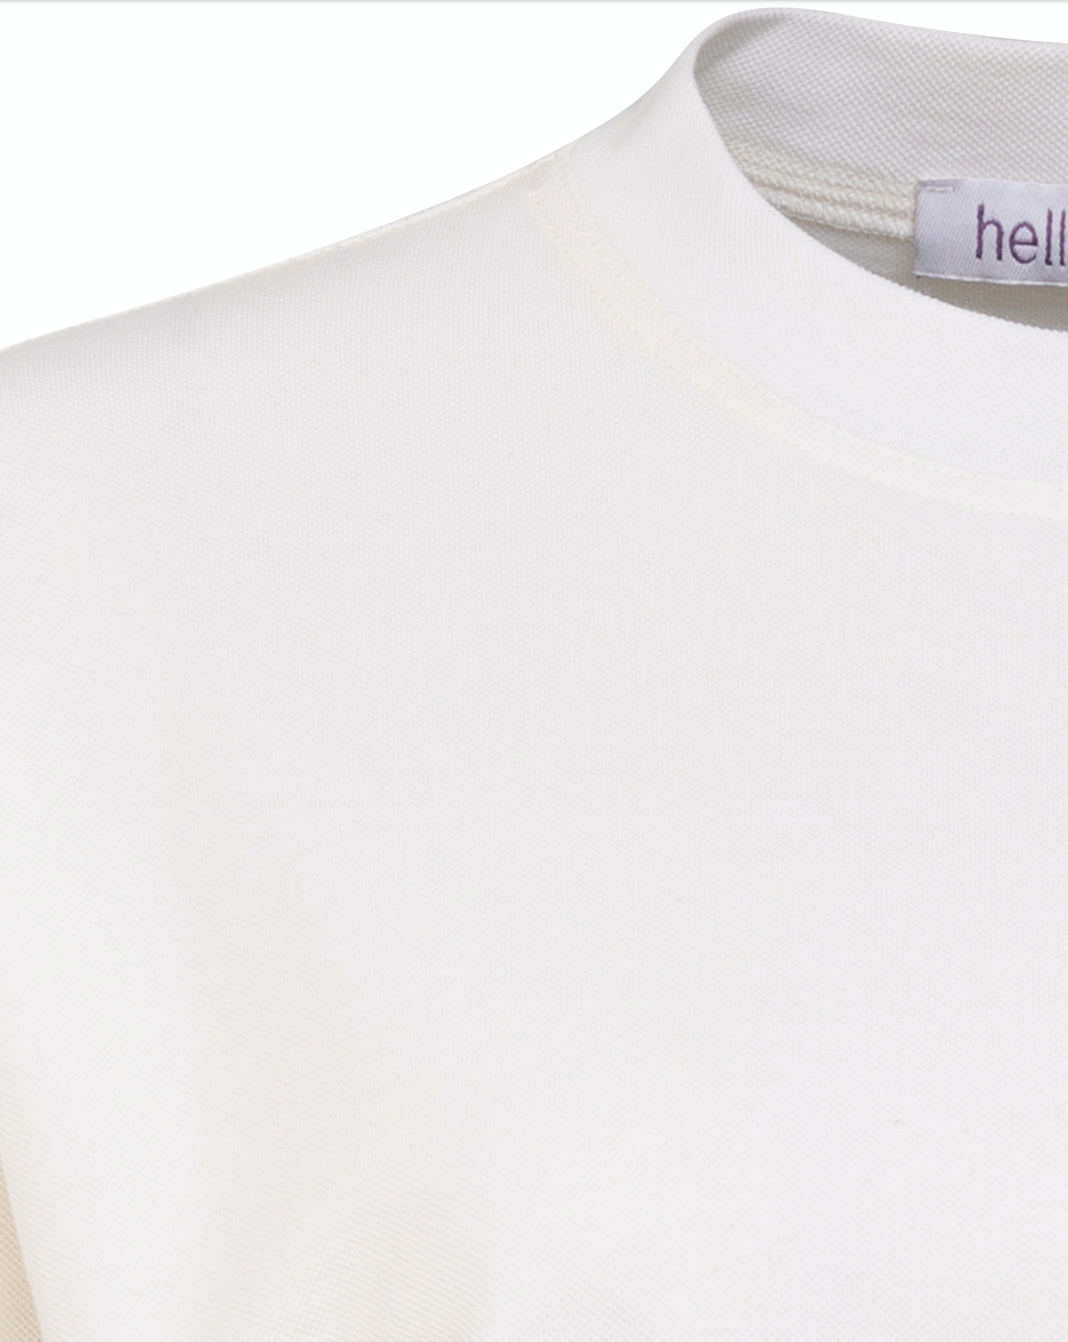 01/5 Longsleeve Organic Cotton White Detail Collar - hello'ben store